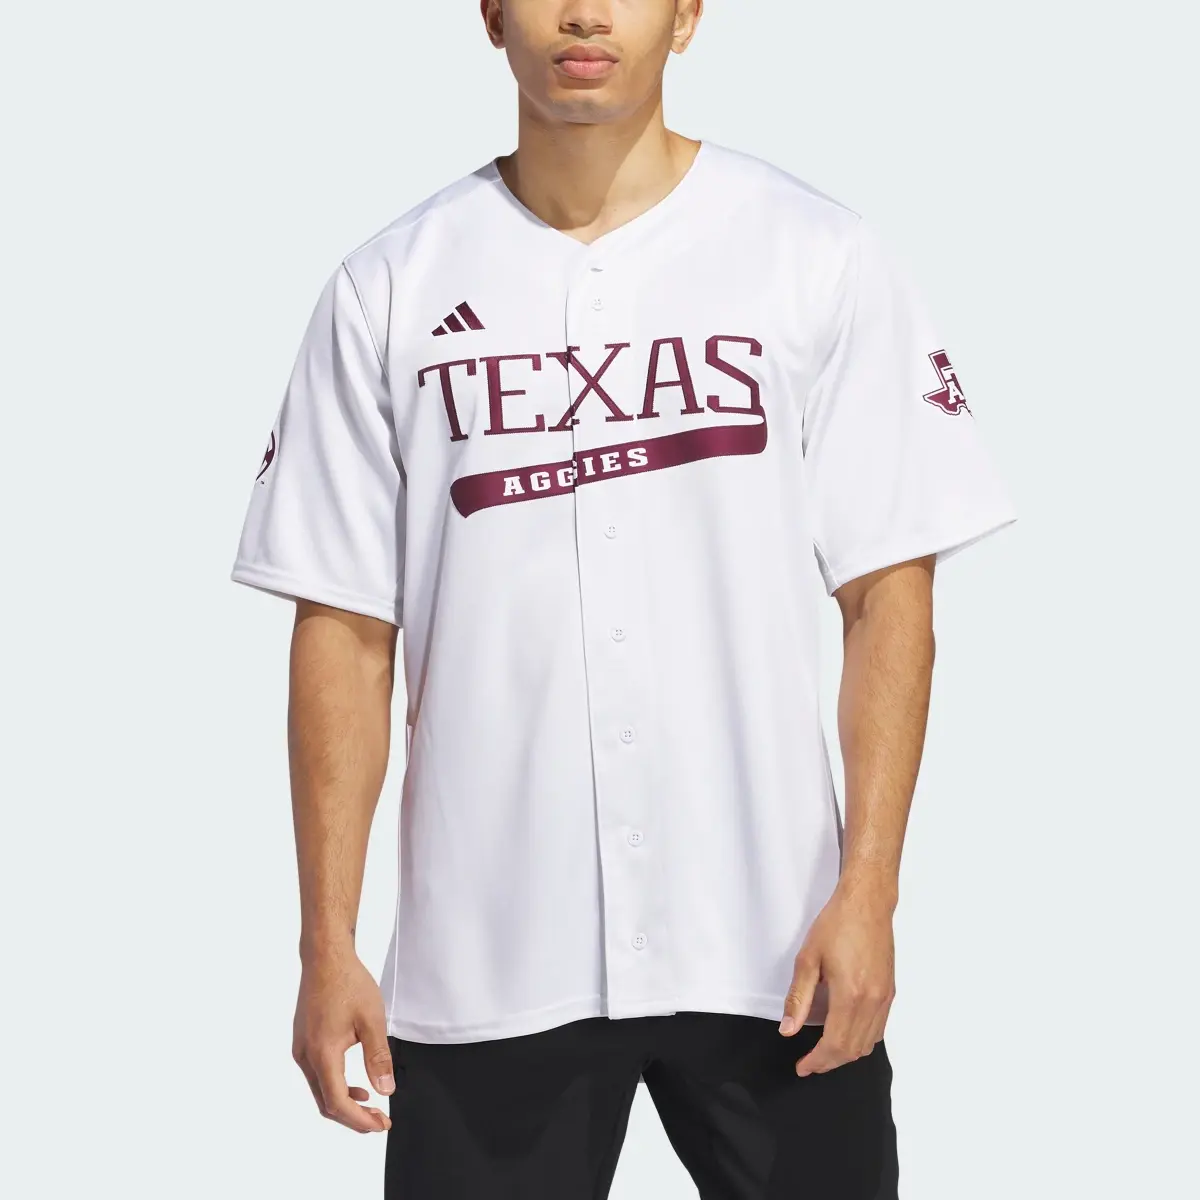 Adidas Texas A&M Baseball Jersey. 1